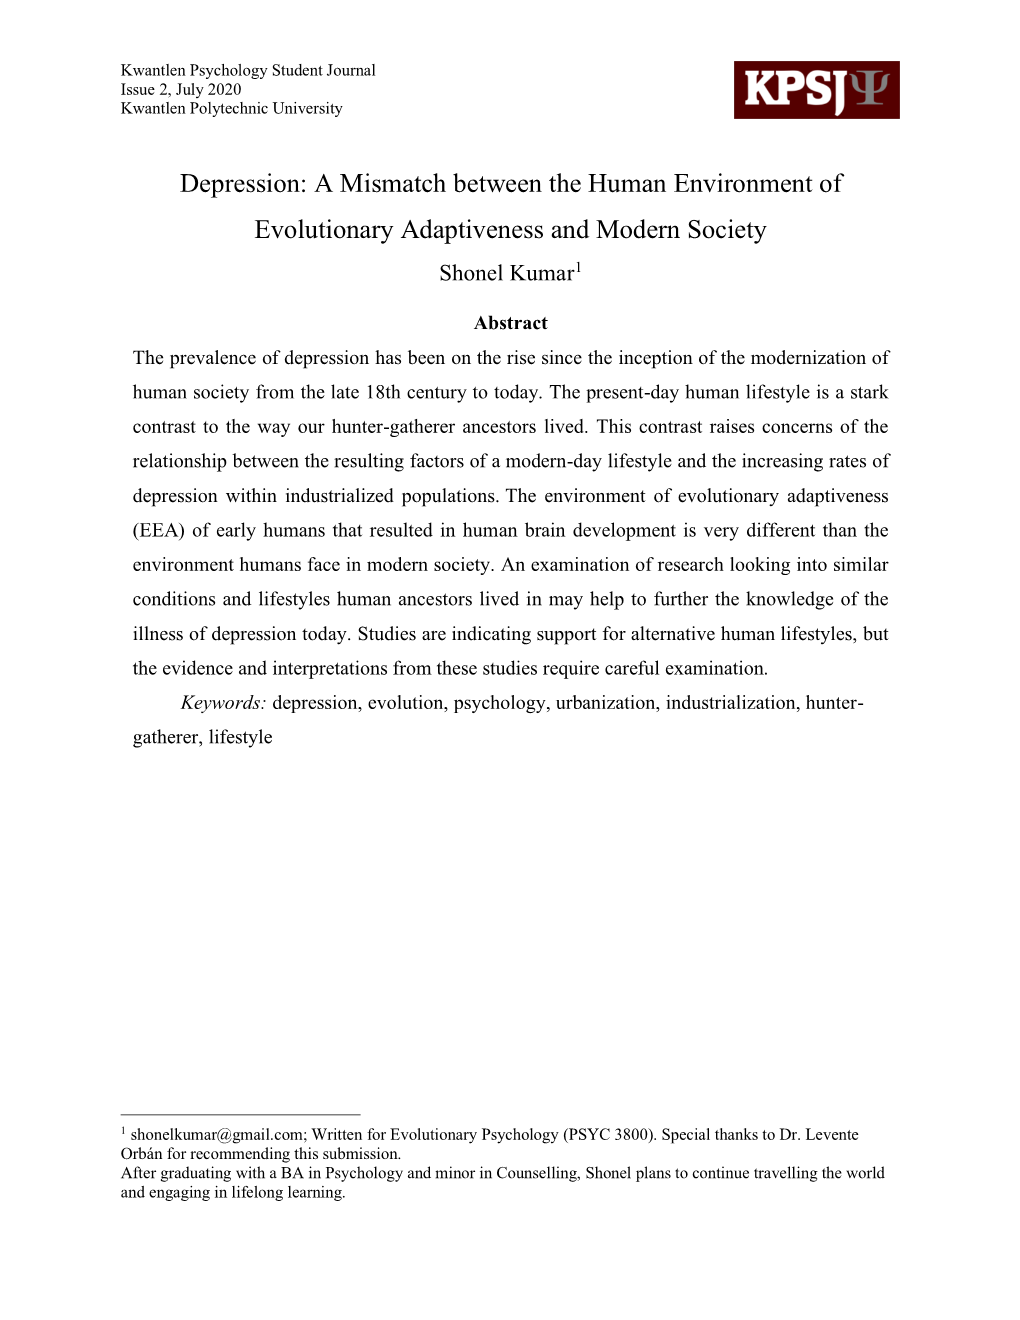 Depression: a Mismatch Between the Human Environment of Evolutionary Adaptiveness and Modern Society Shonel Kumar1